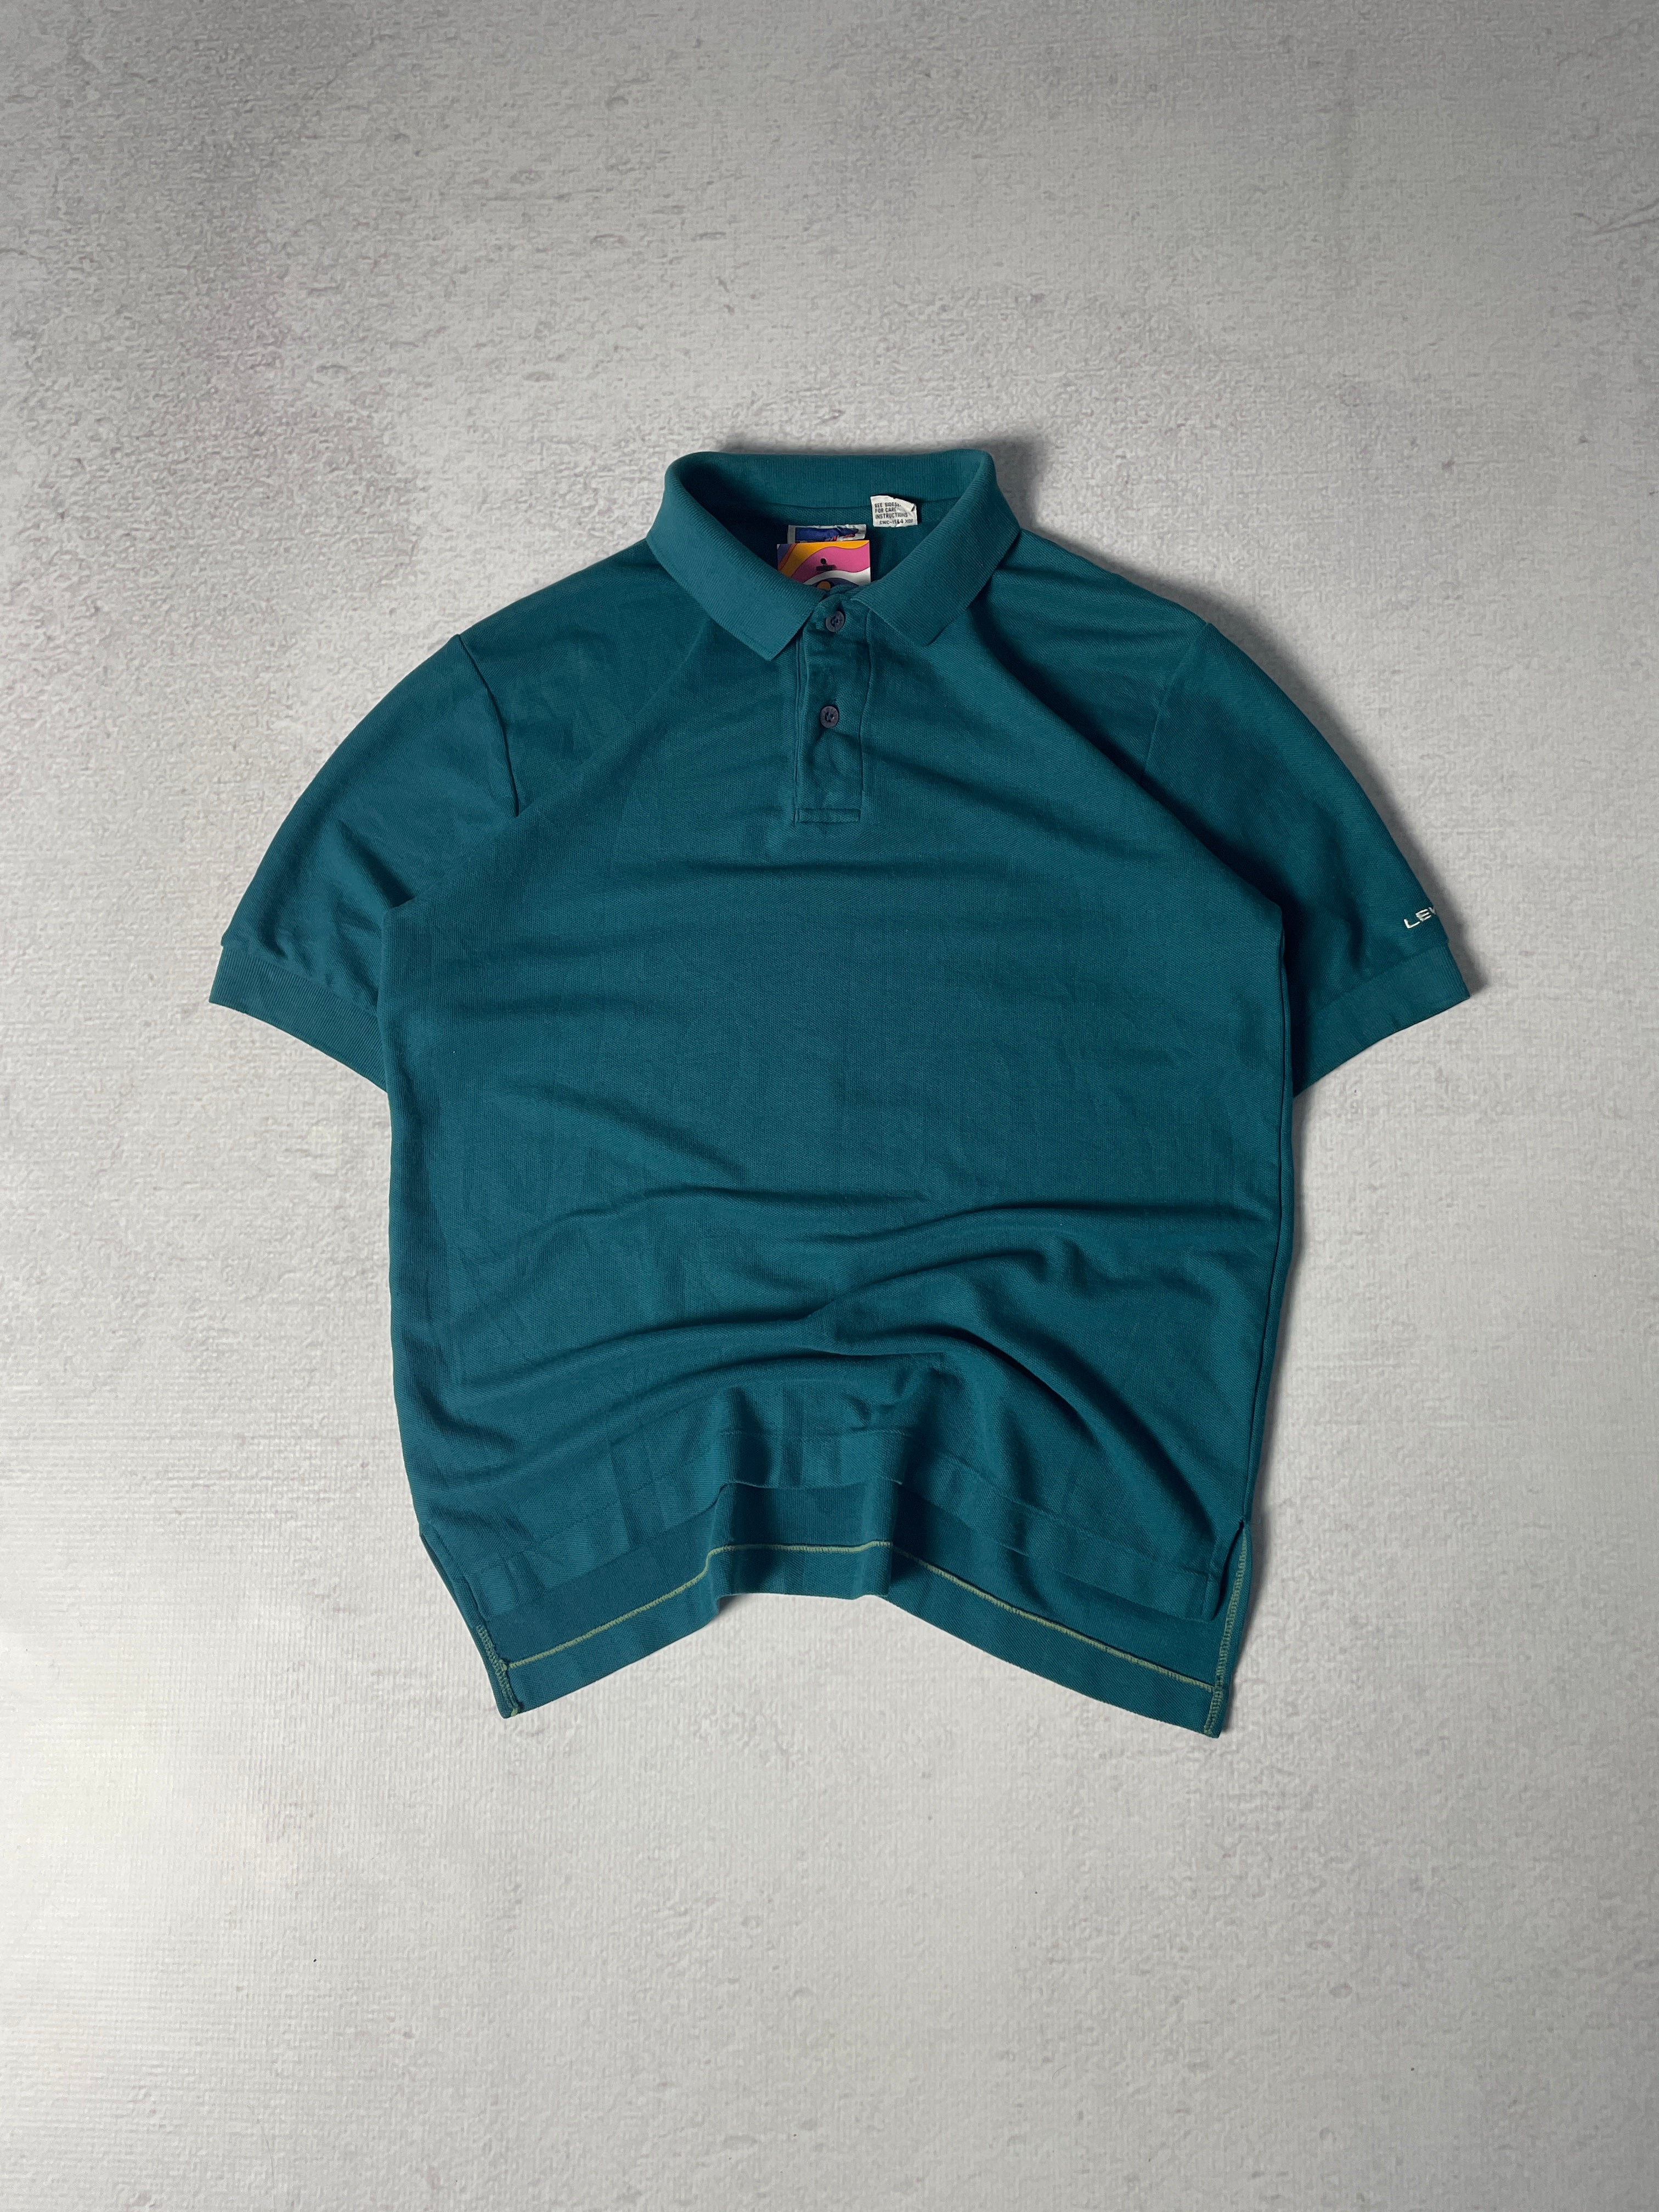 Vintage Levis Polo Shirt - Men's Medium